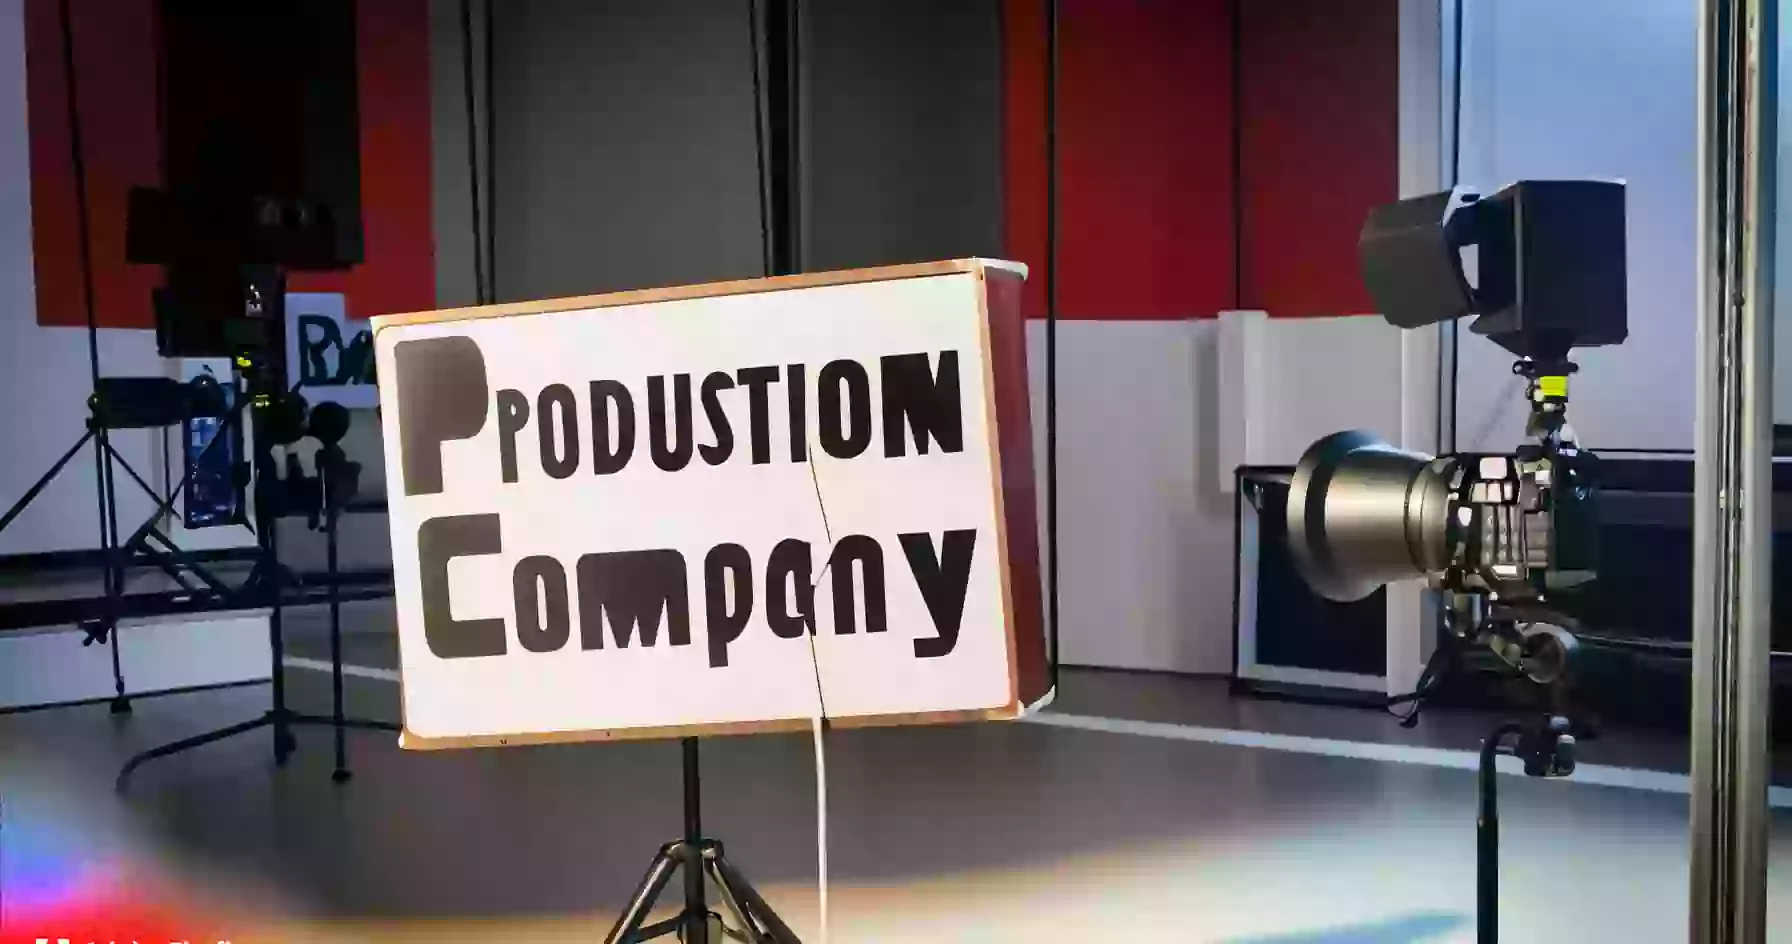 Film Production Company vs A Studio